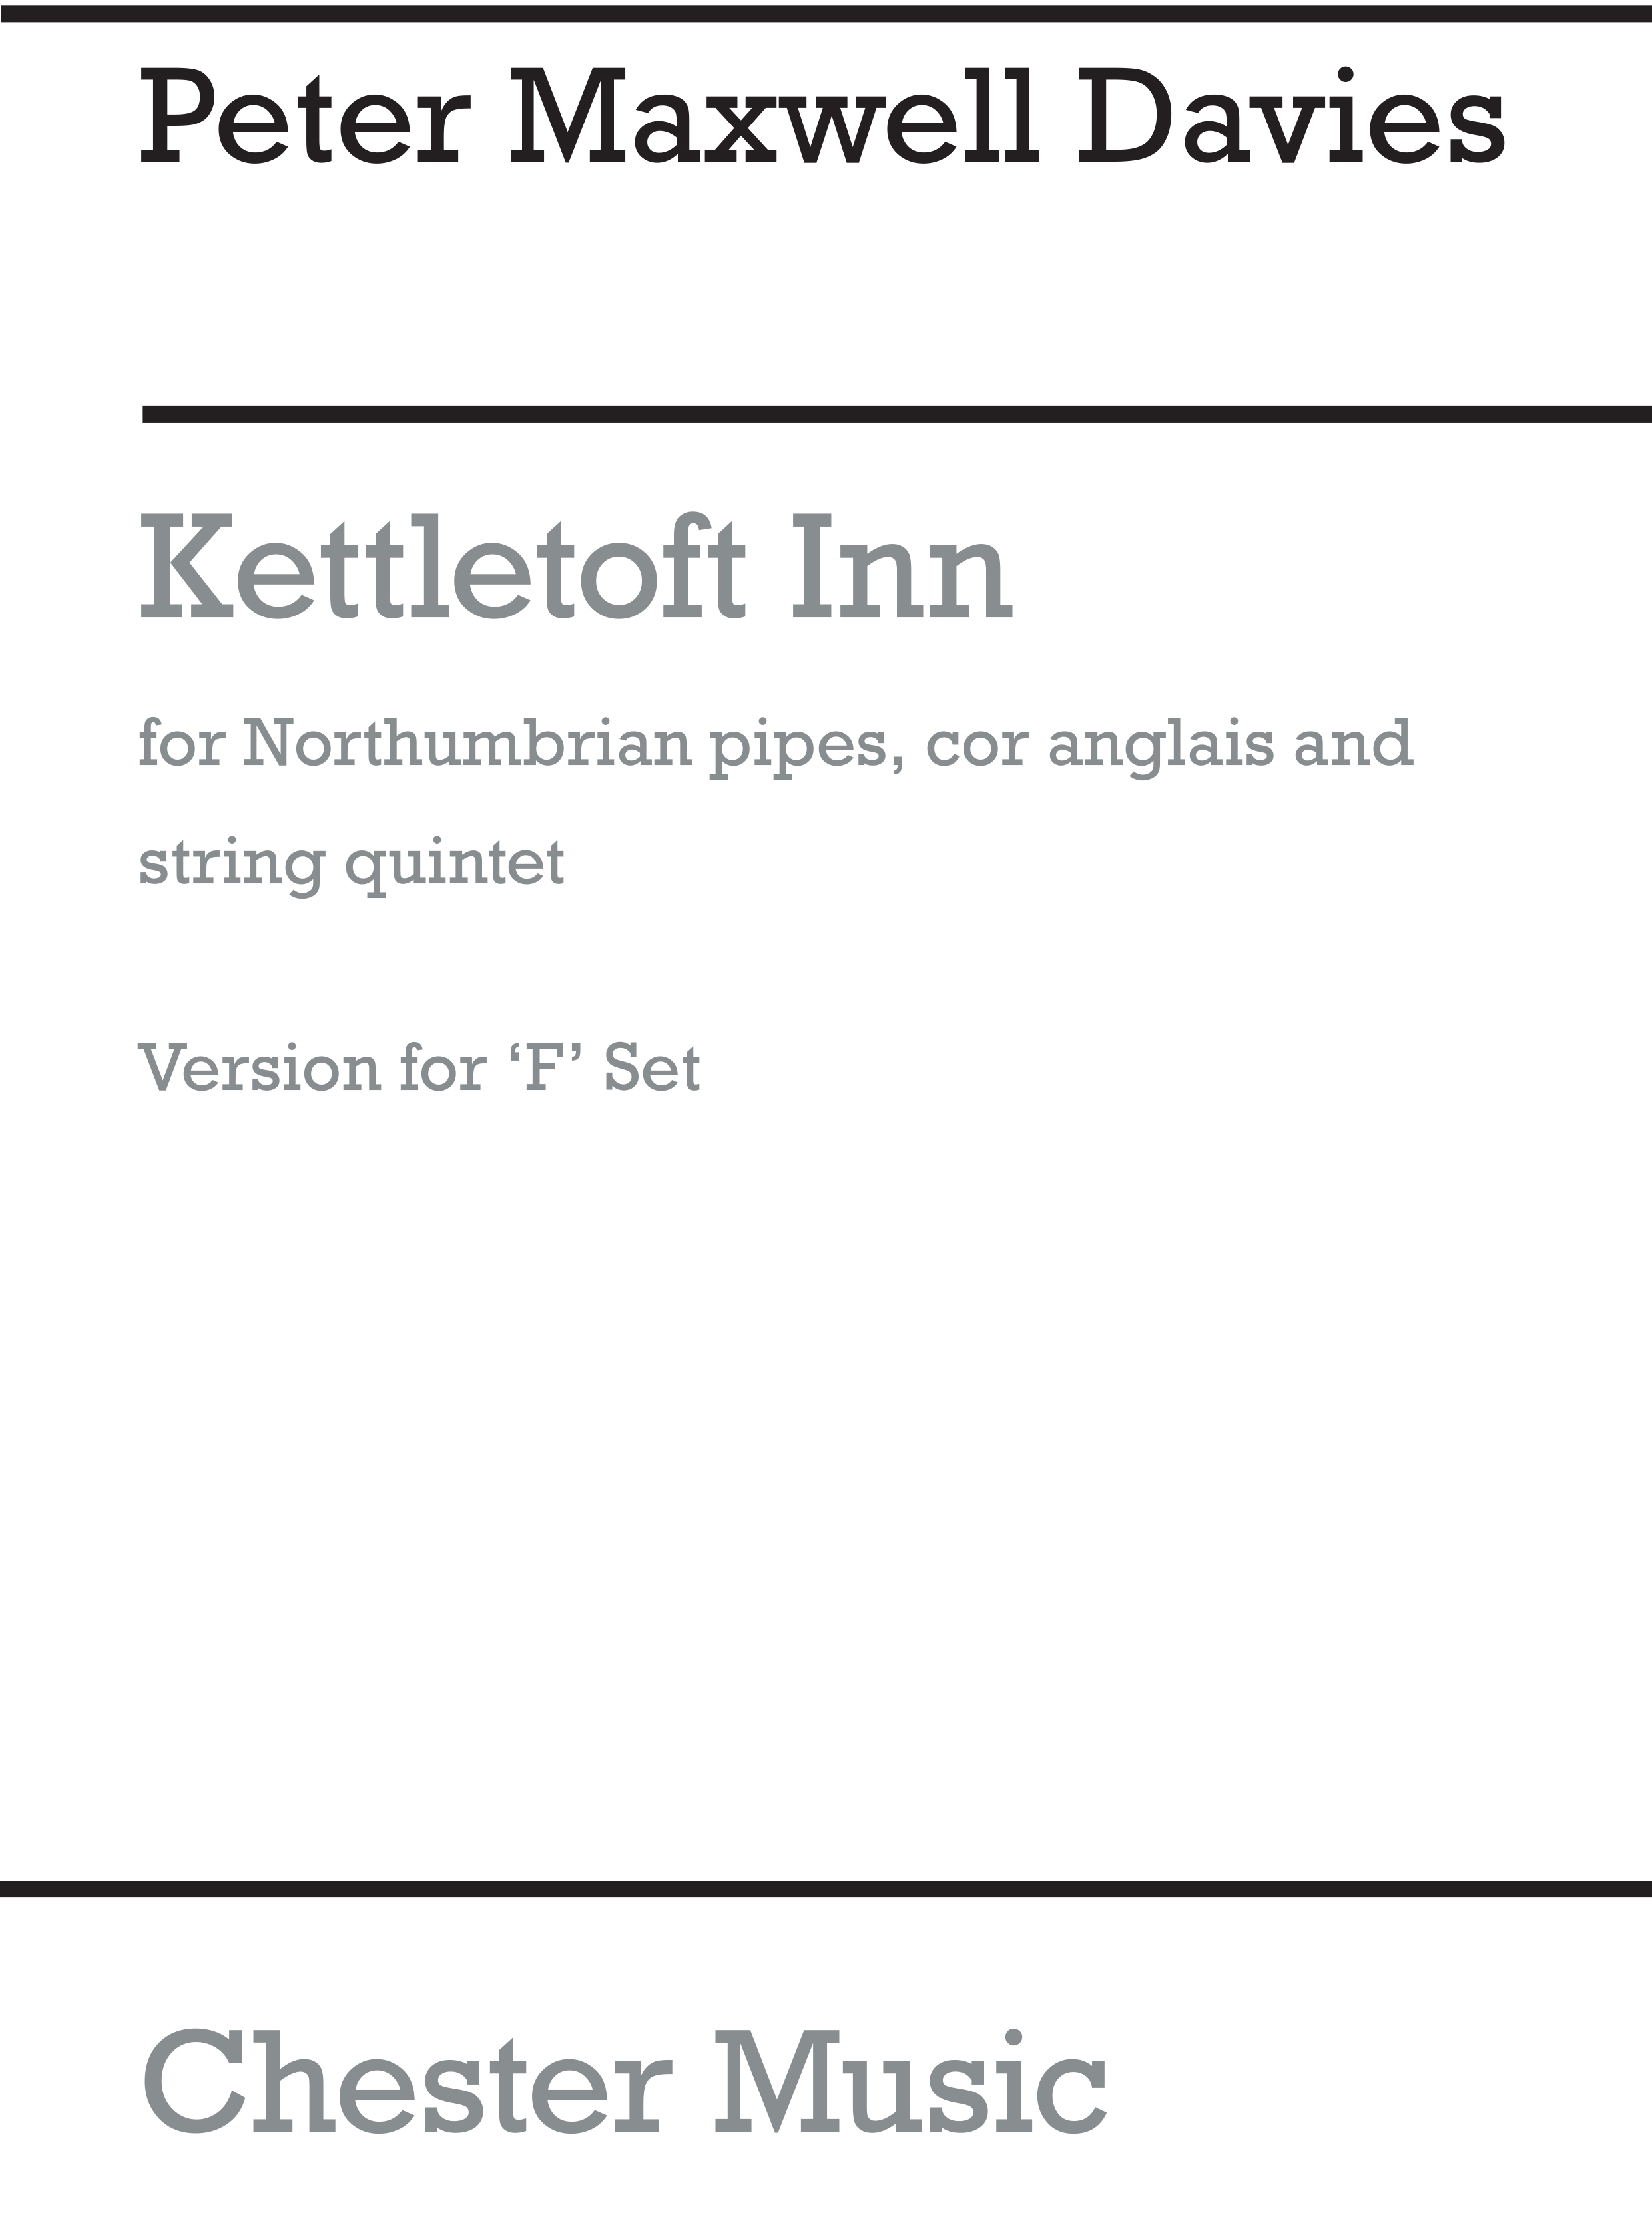 Peter Maxwell Davies: Kettletoft Inn (Version For F Set): Score